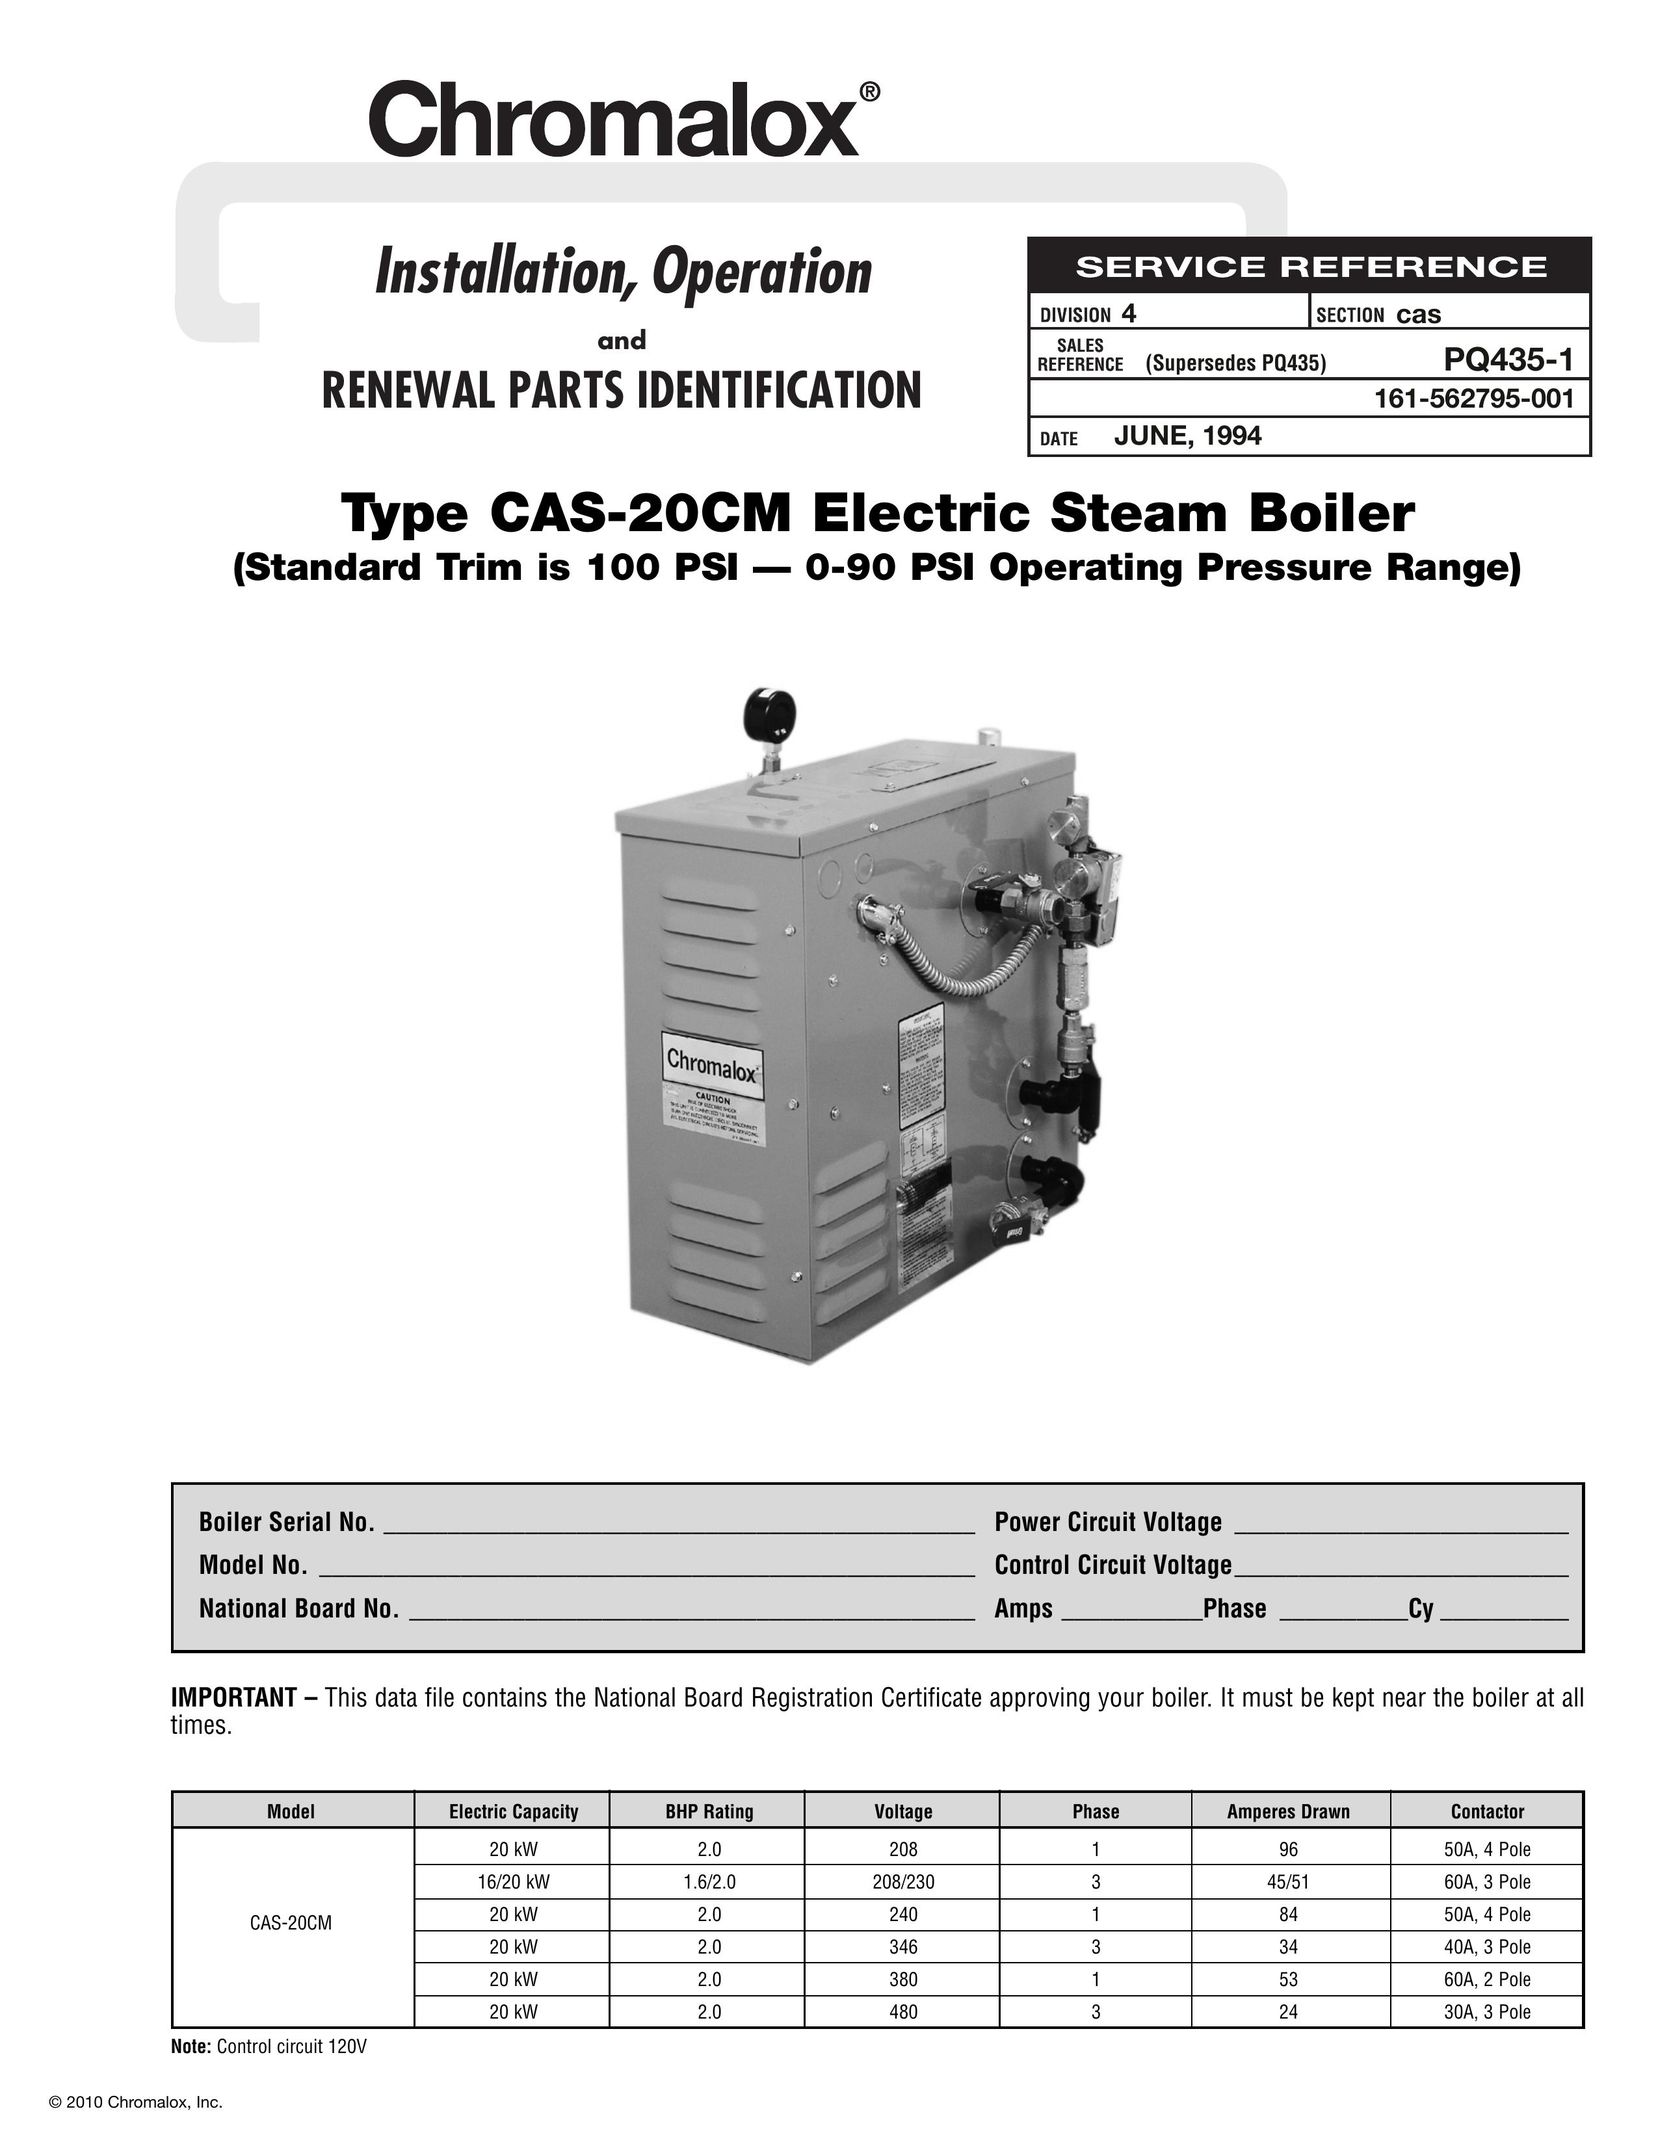 Chromalox CAS-20CM Boiler User Manual